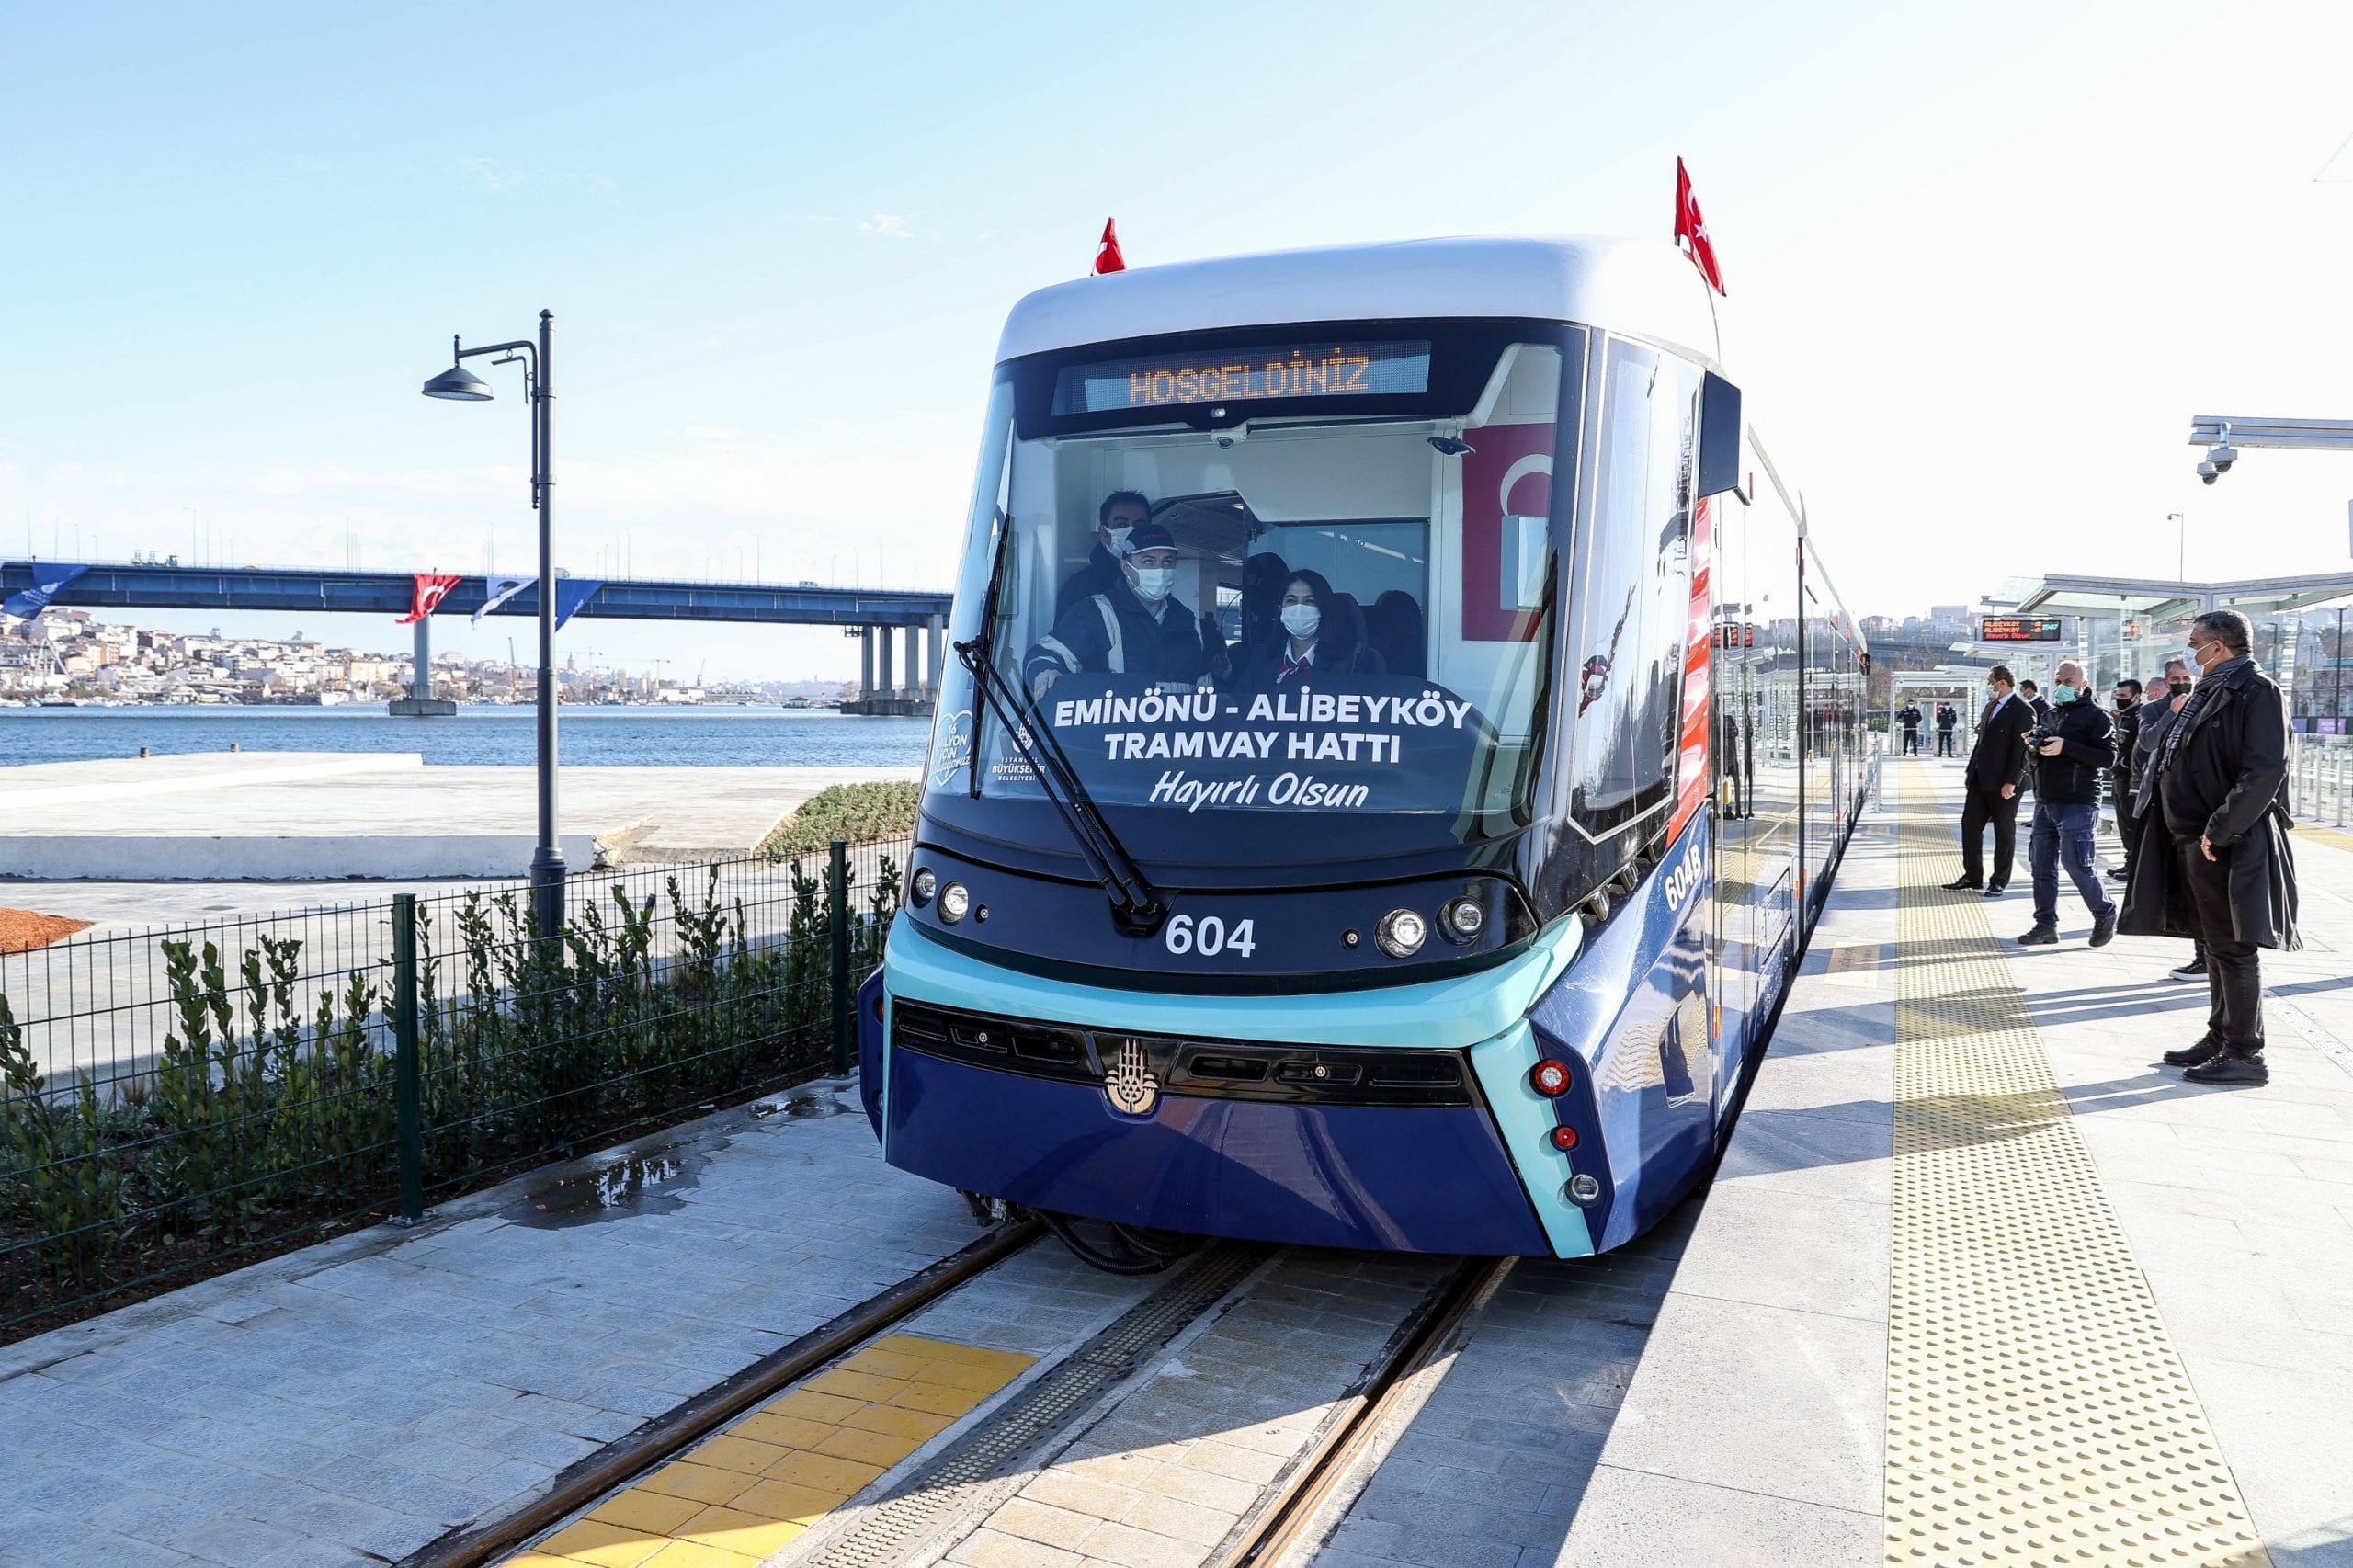 Long-awaited Golden Horn tram opens in Turkey